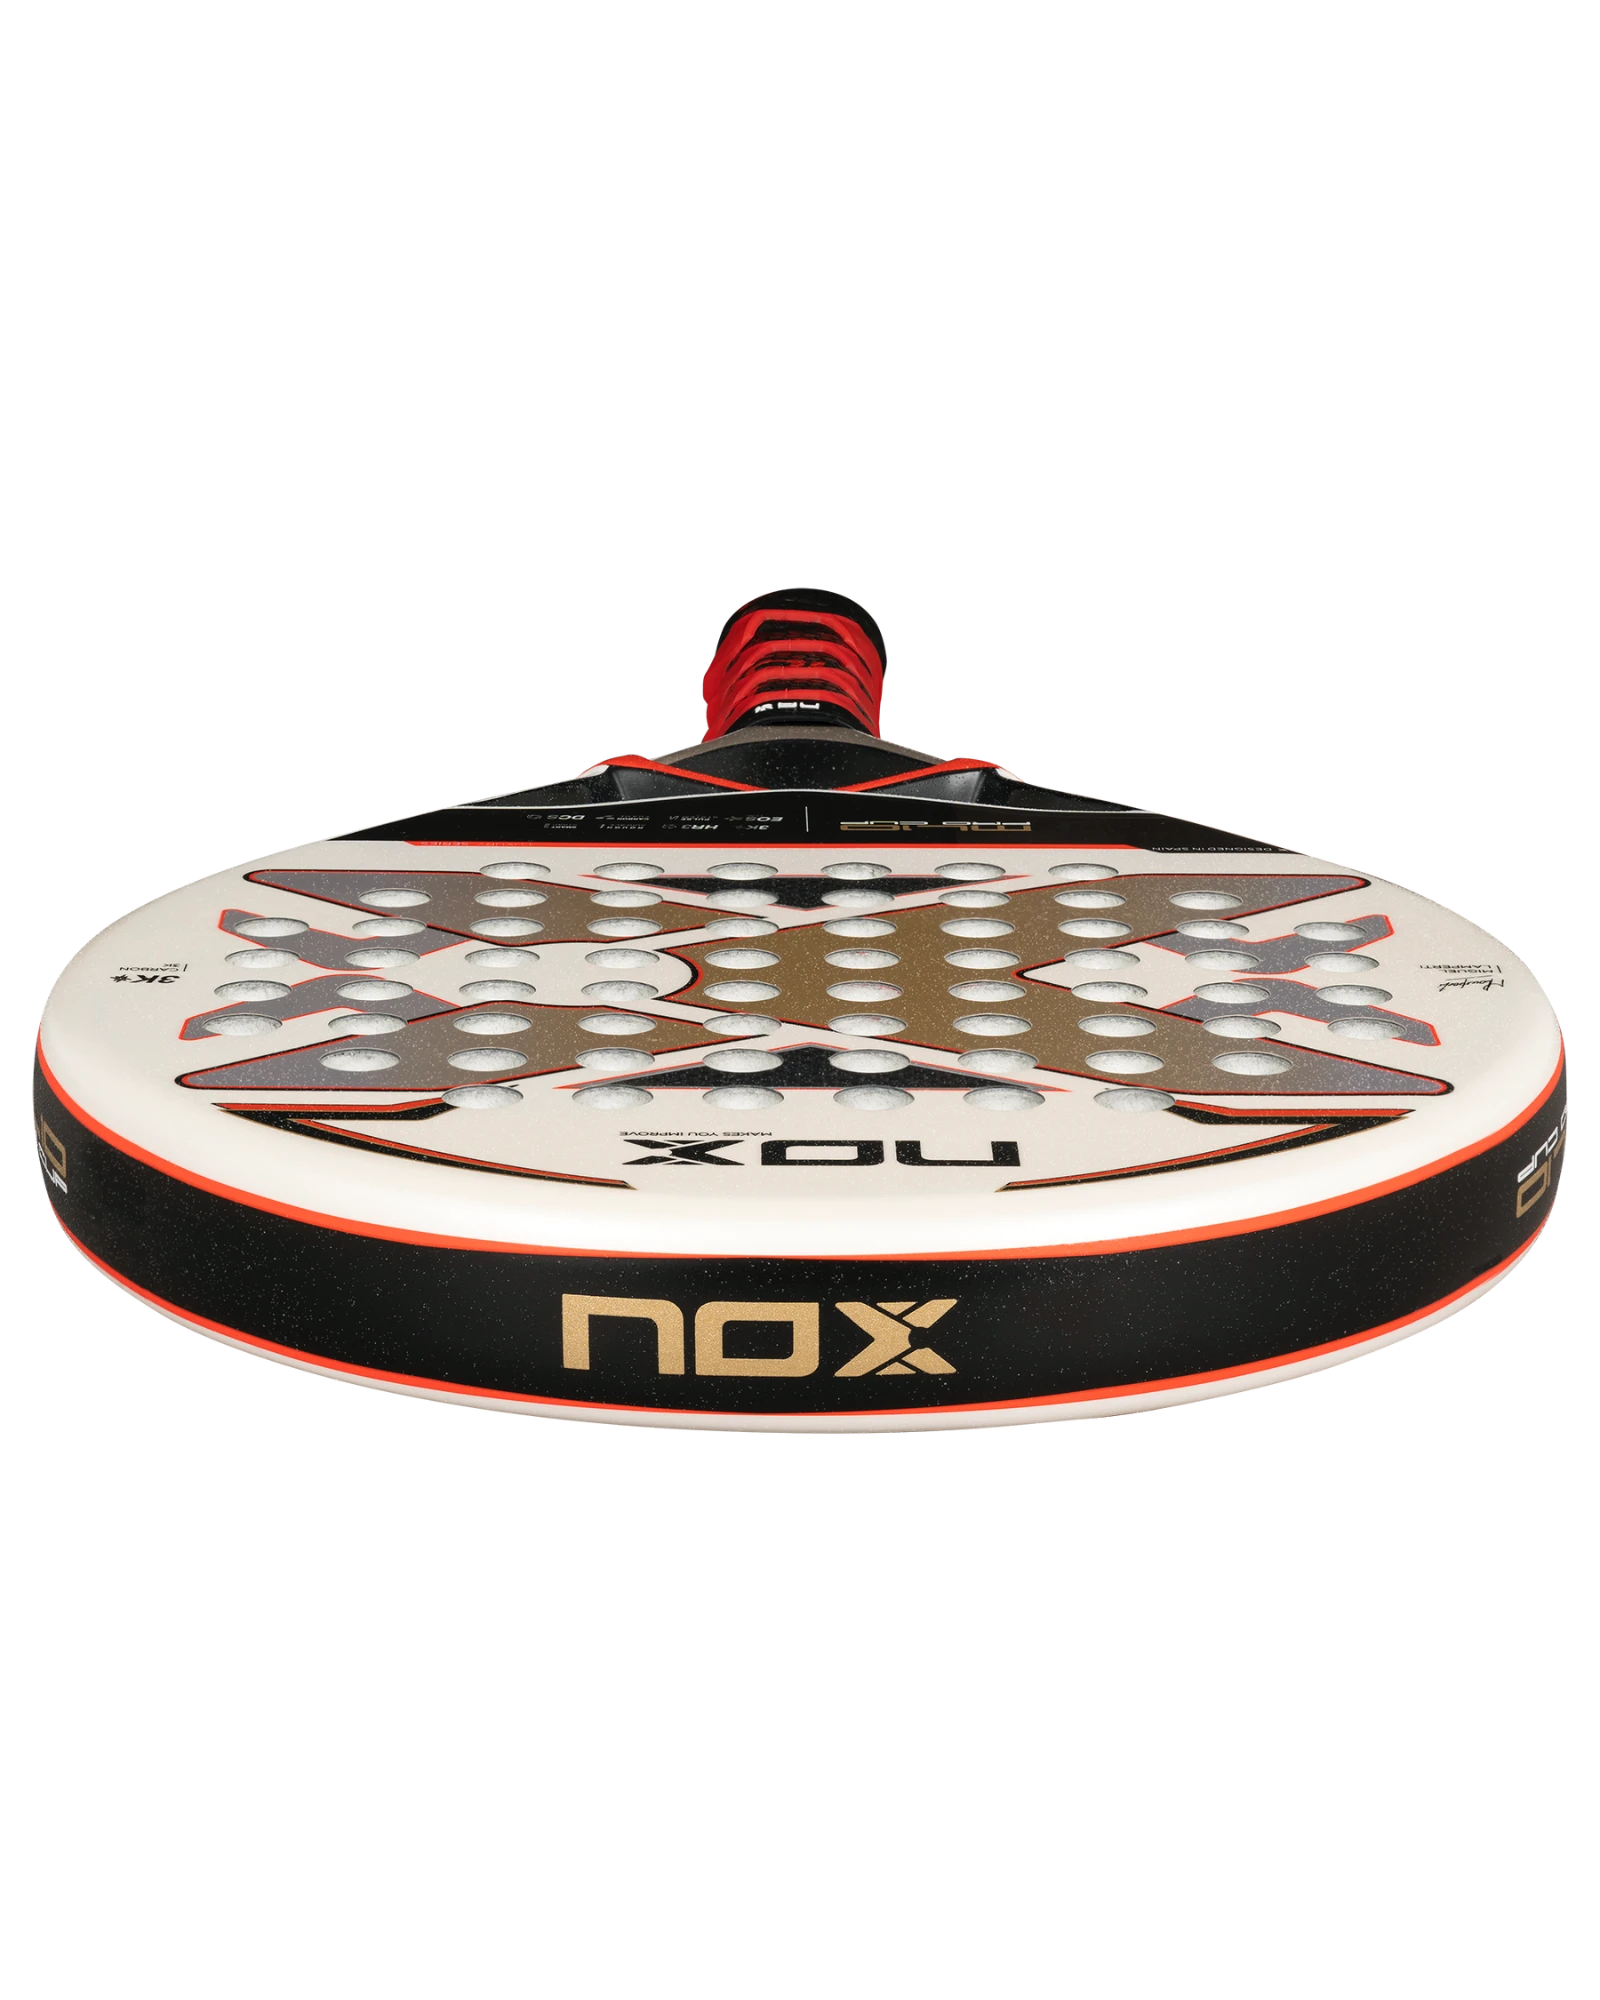 The Nox ML10 PRO CUP Luxury Padel Racket